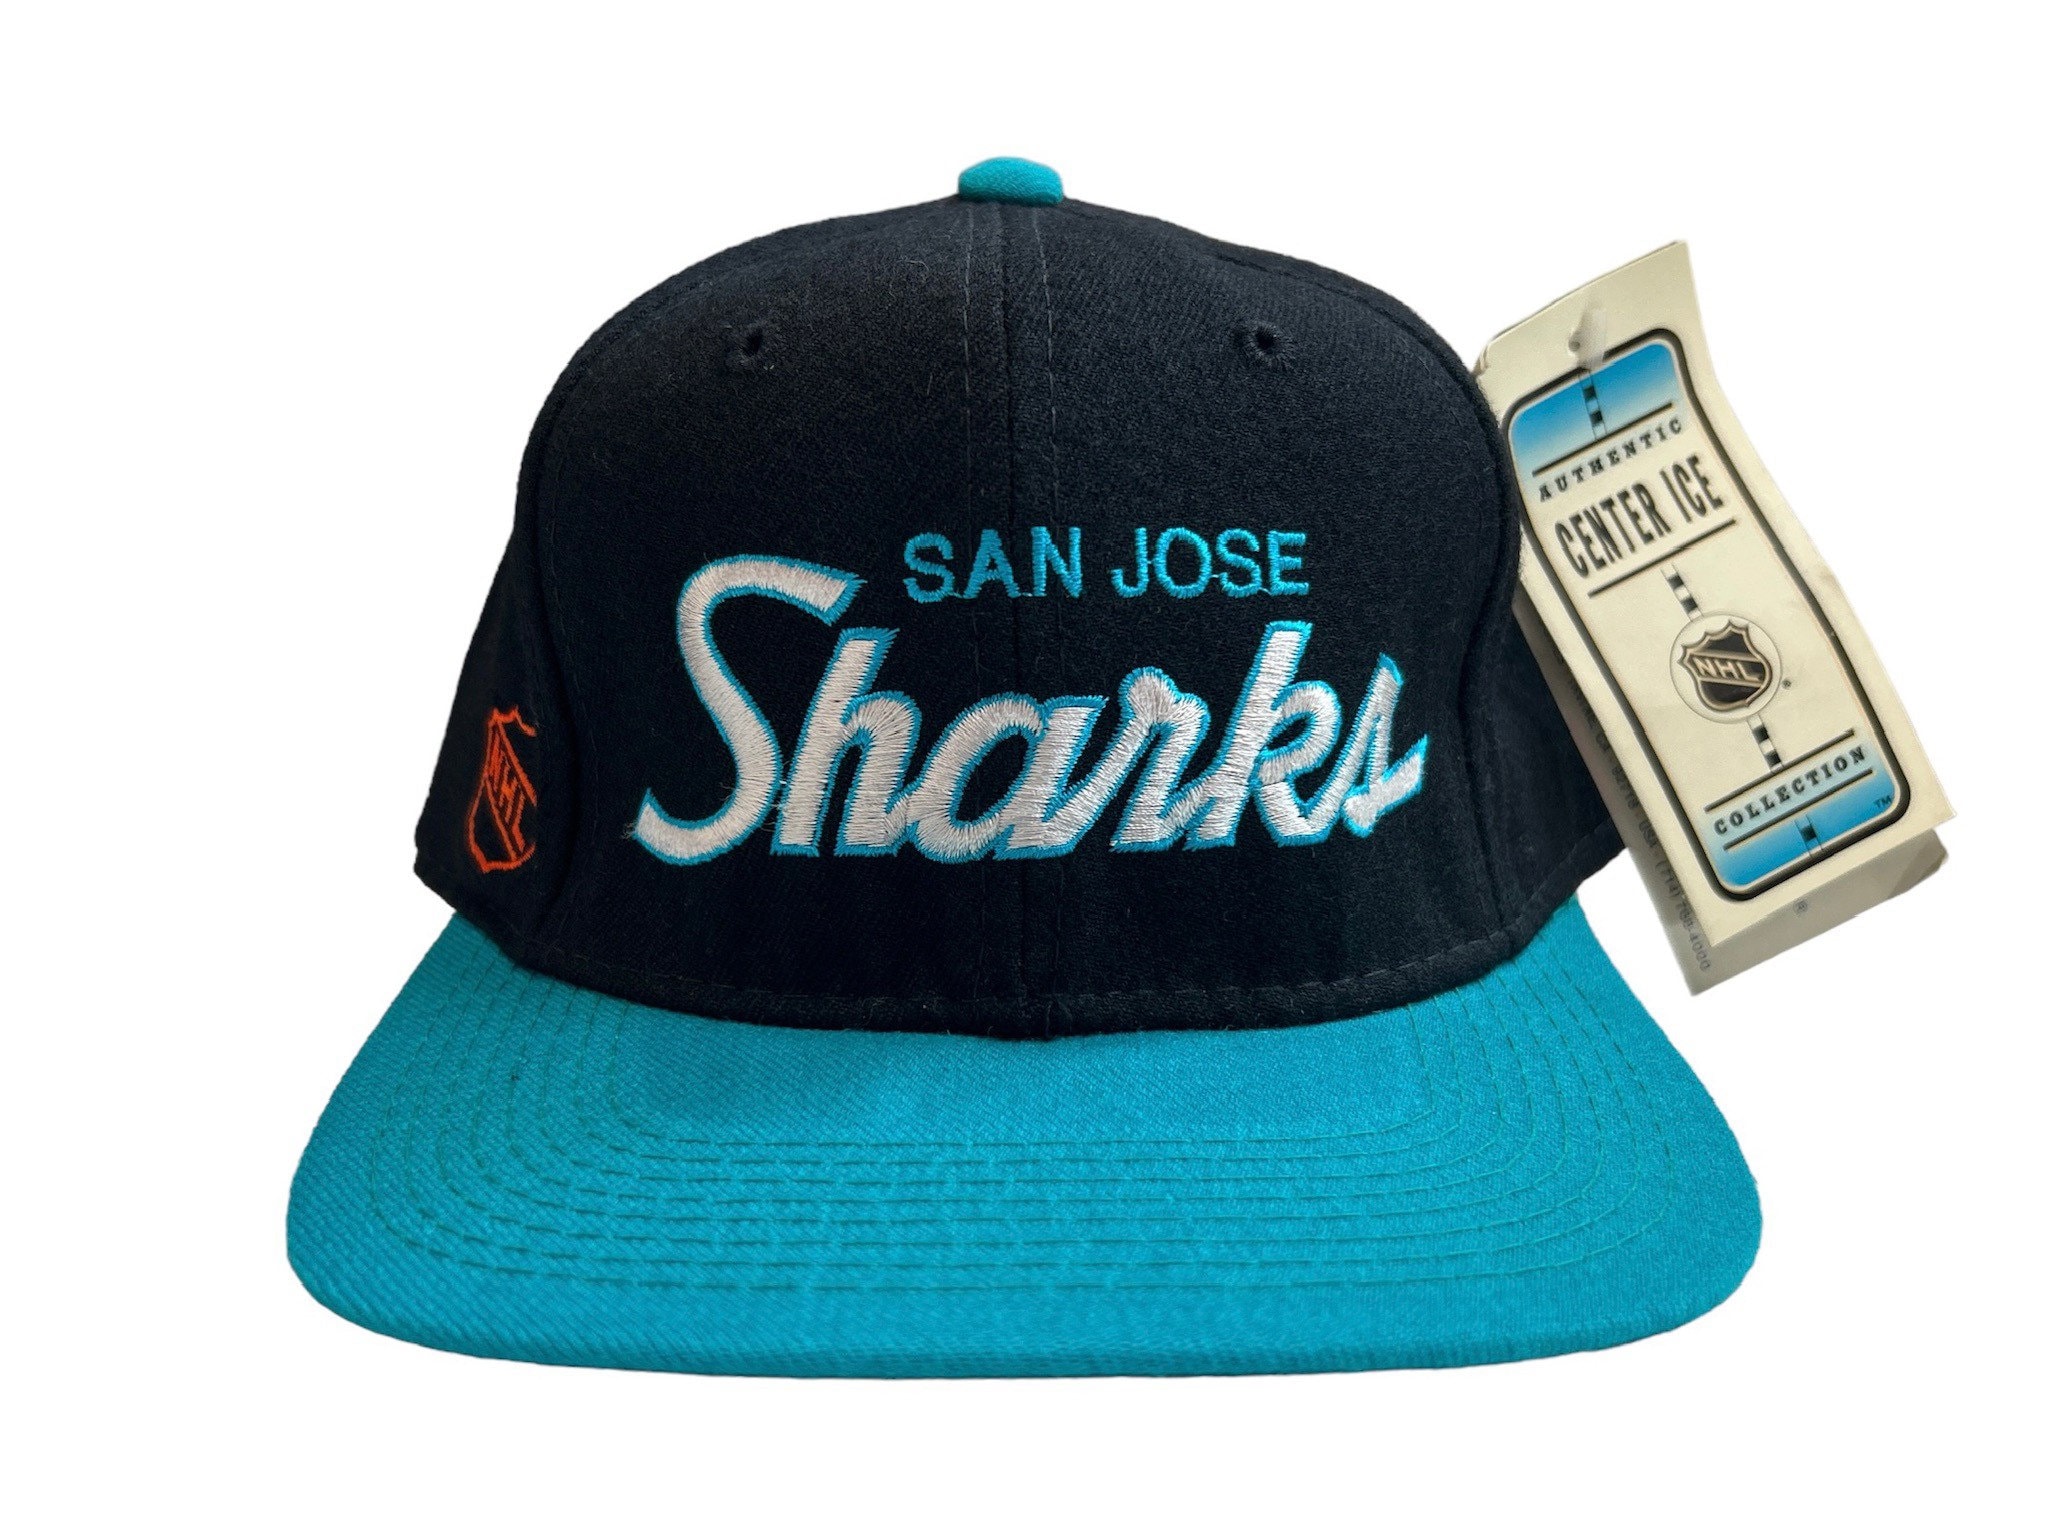 Reebok San Jose Sharks Hat size s/m